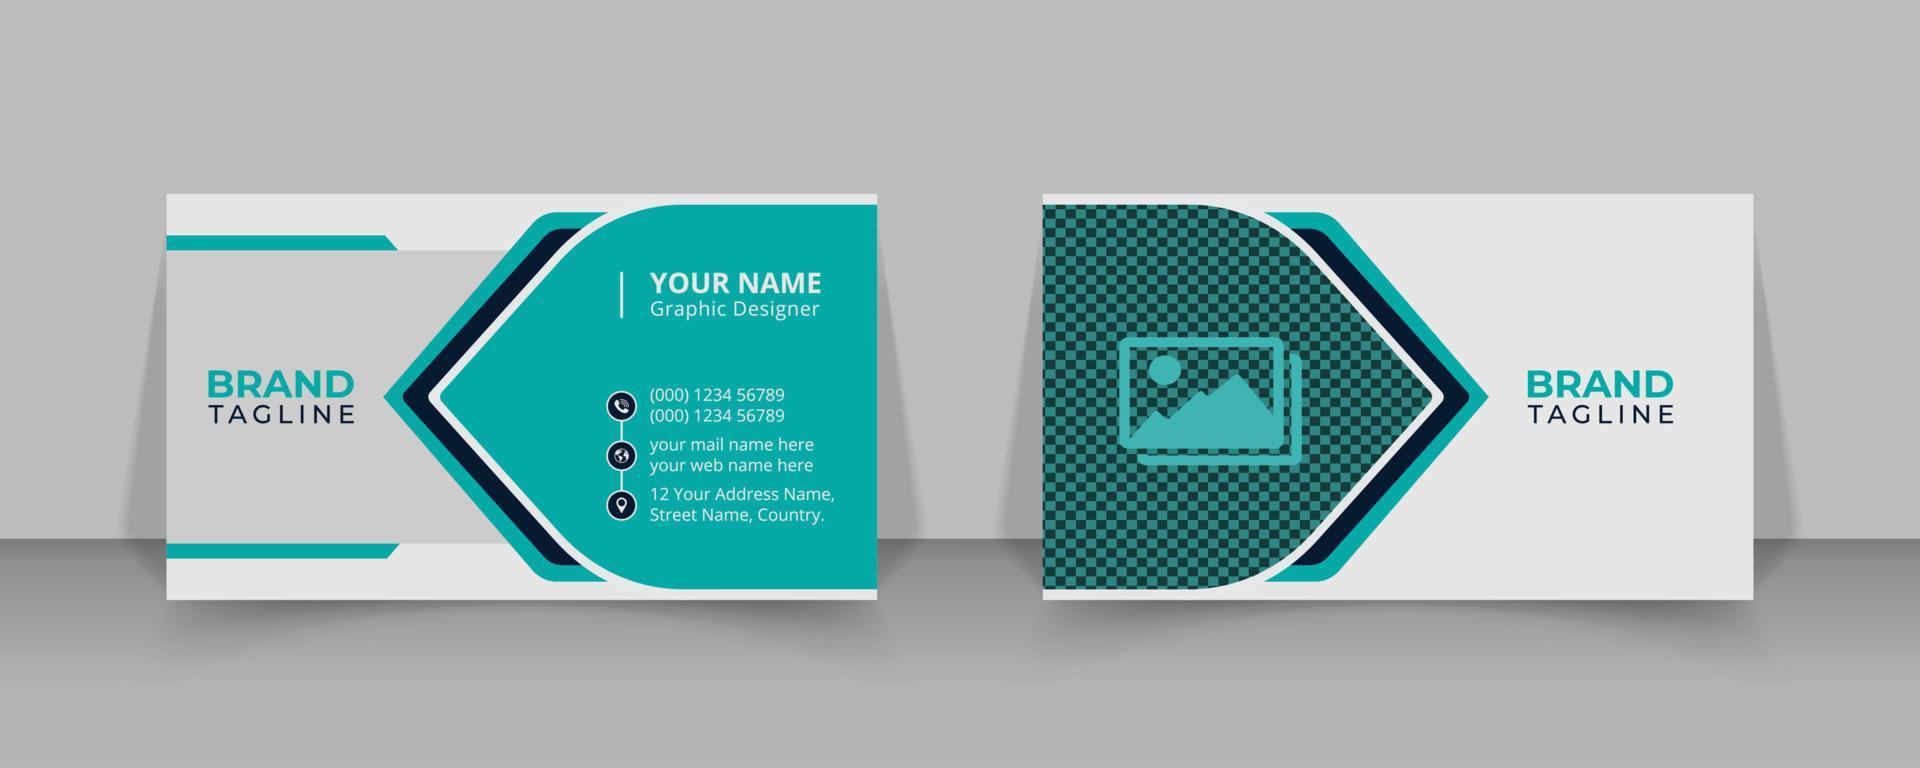 plantilla de diseño de tarjeta de visita moderna para infografía vector